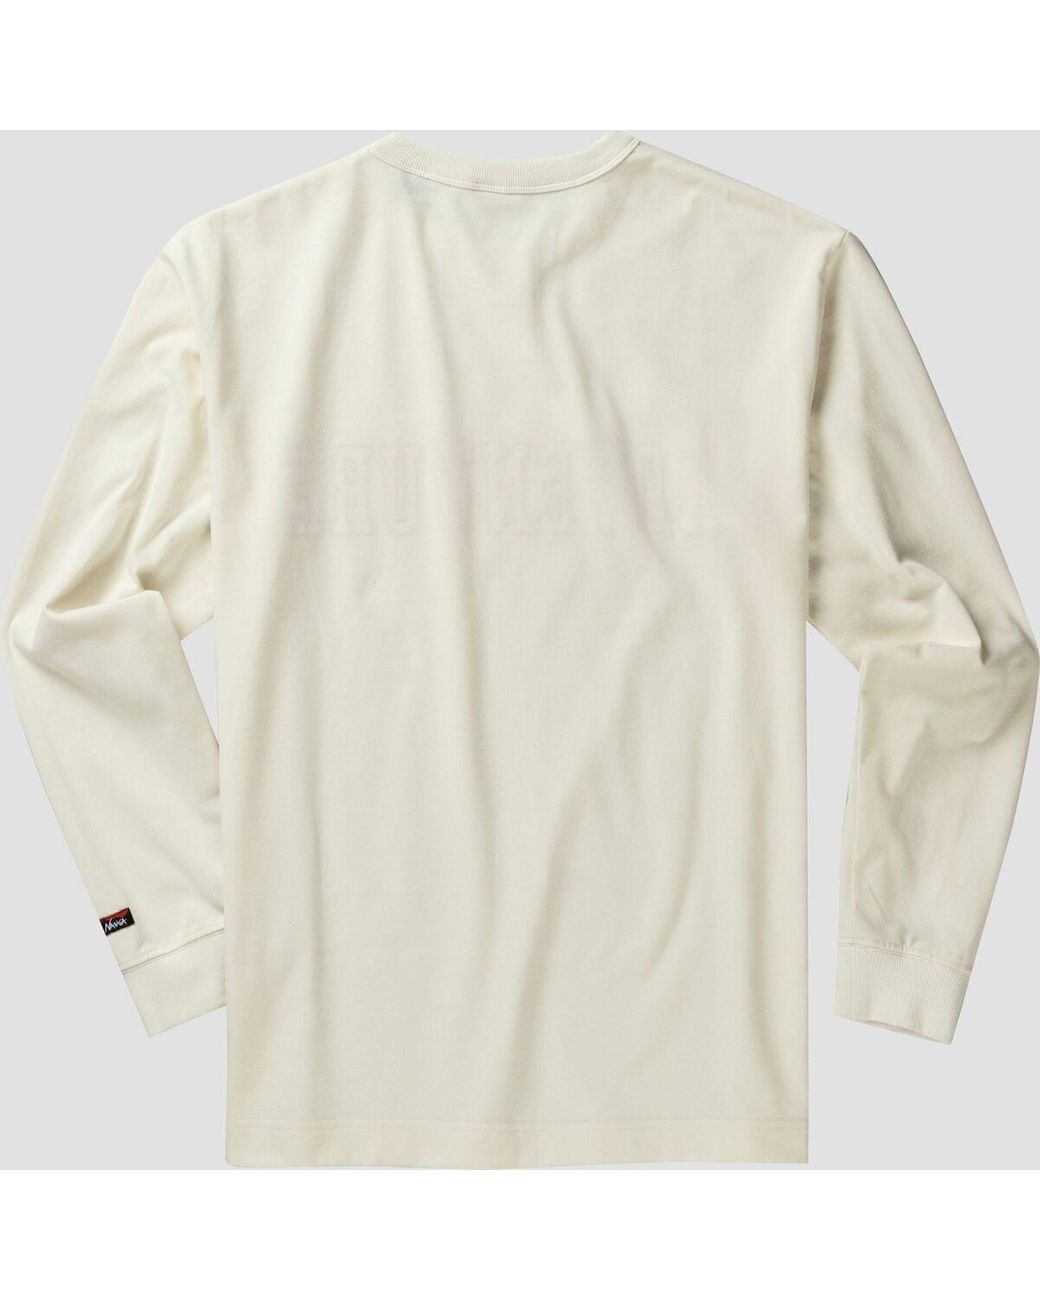 NANGA Eco Hybrid Adventure Long-sleeve T-shirt in White for